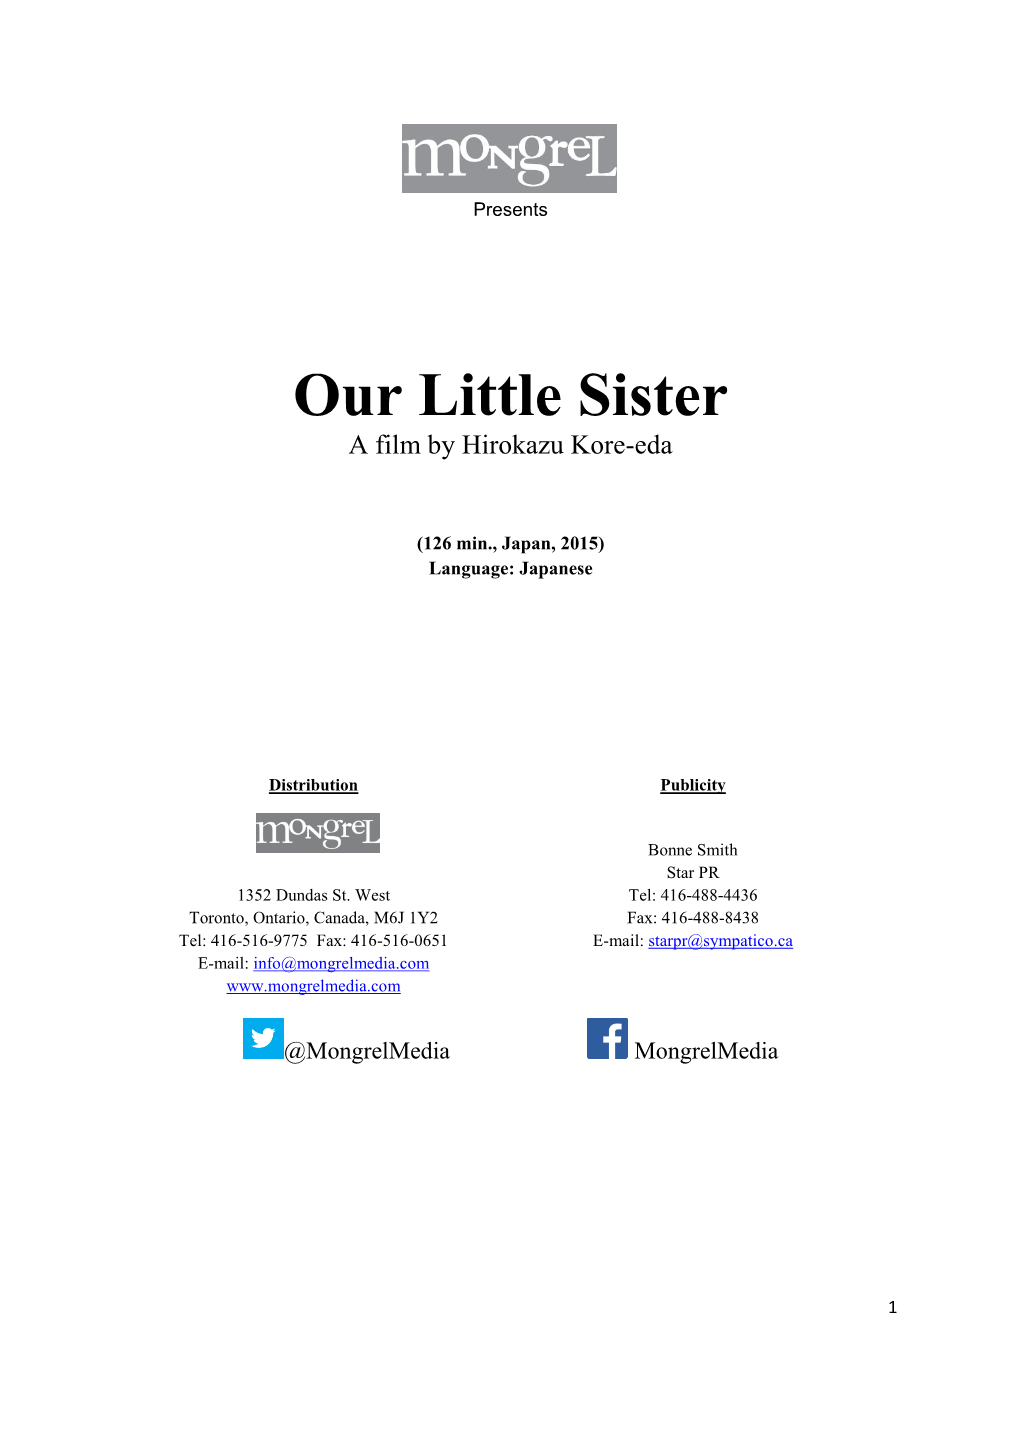 Our Little Sister a Film by Hirokazu Kore-Eda